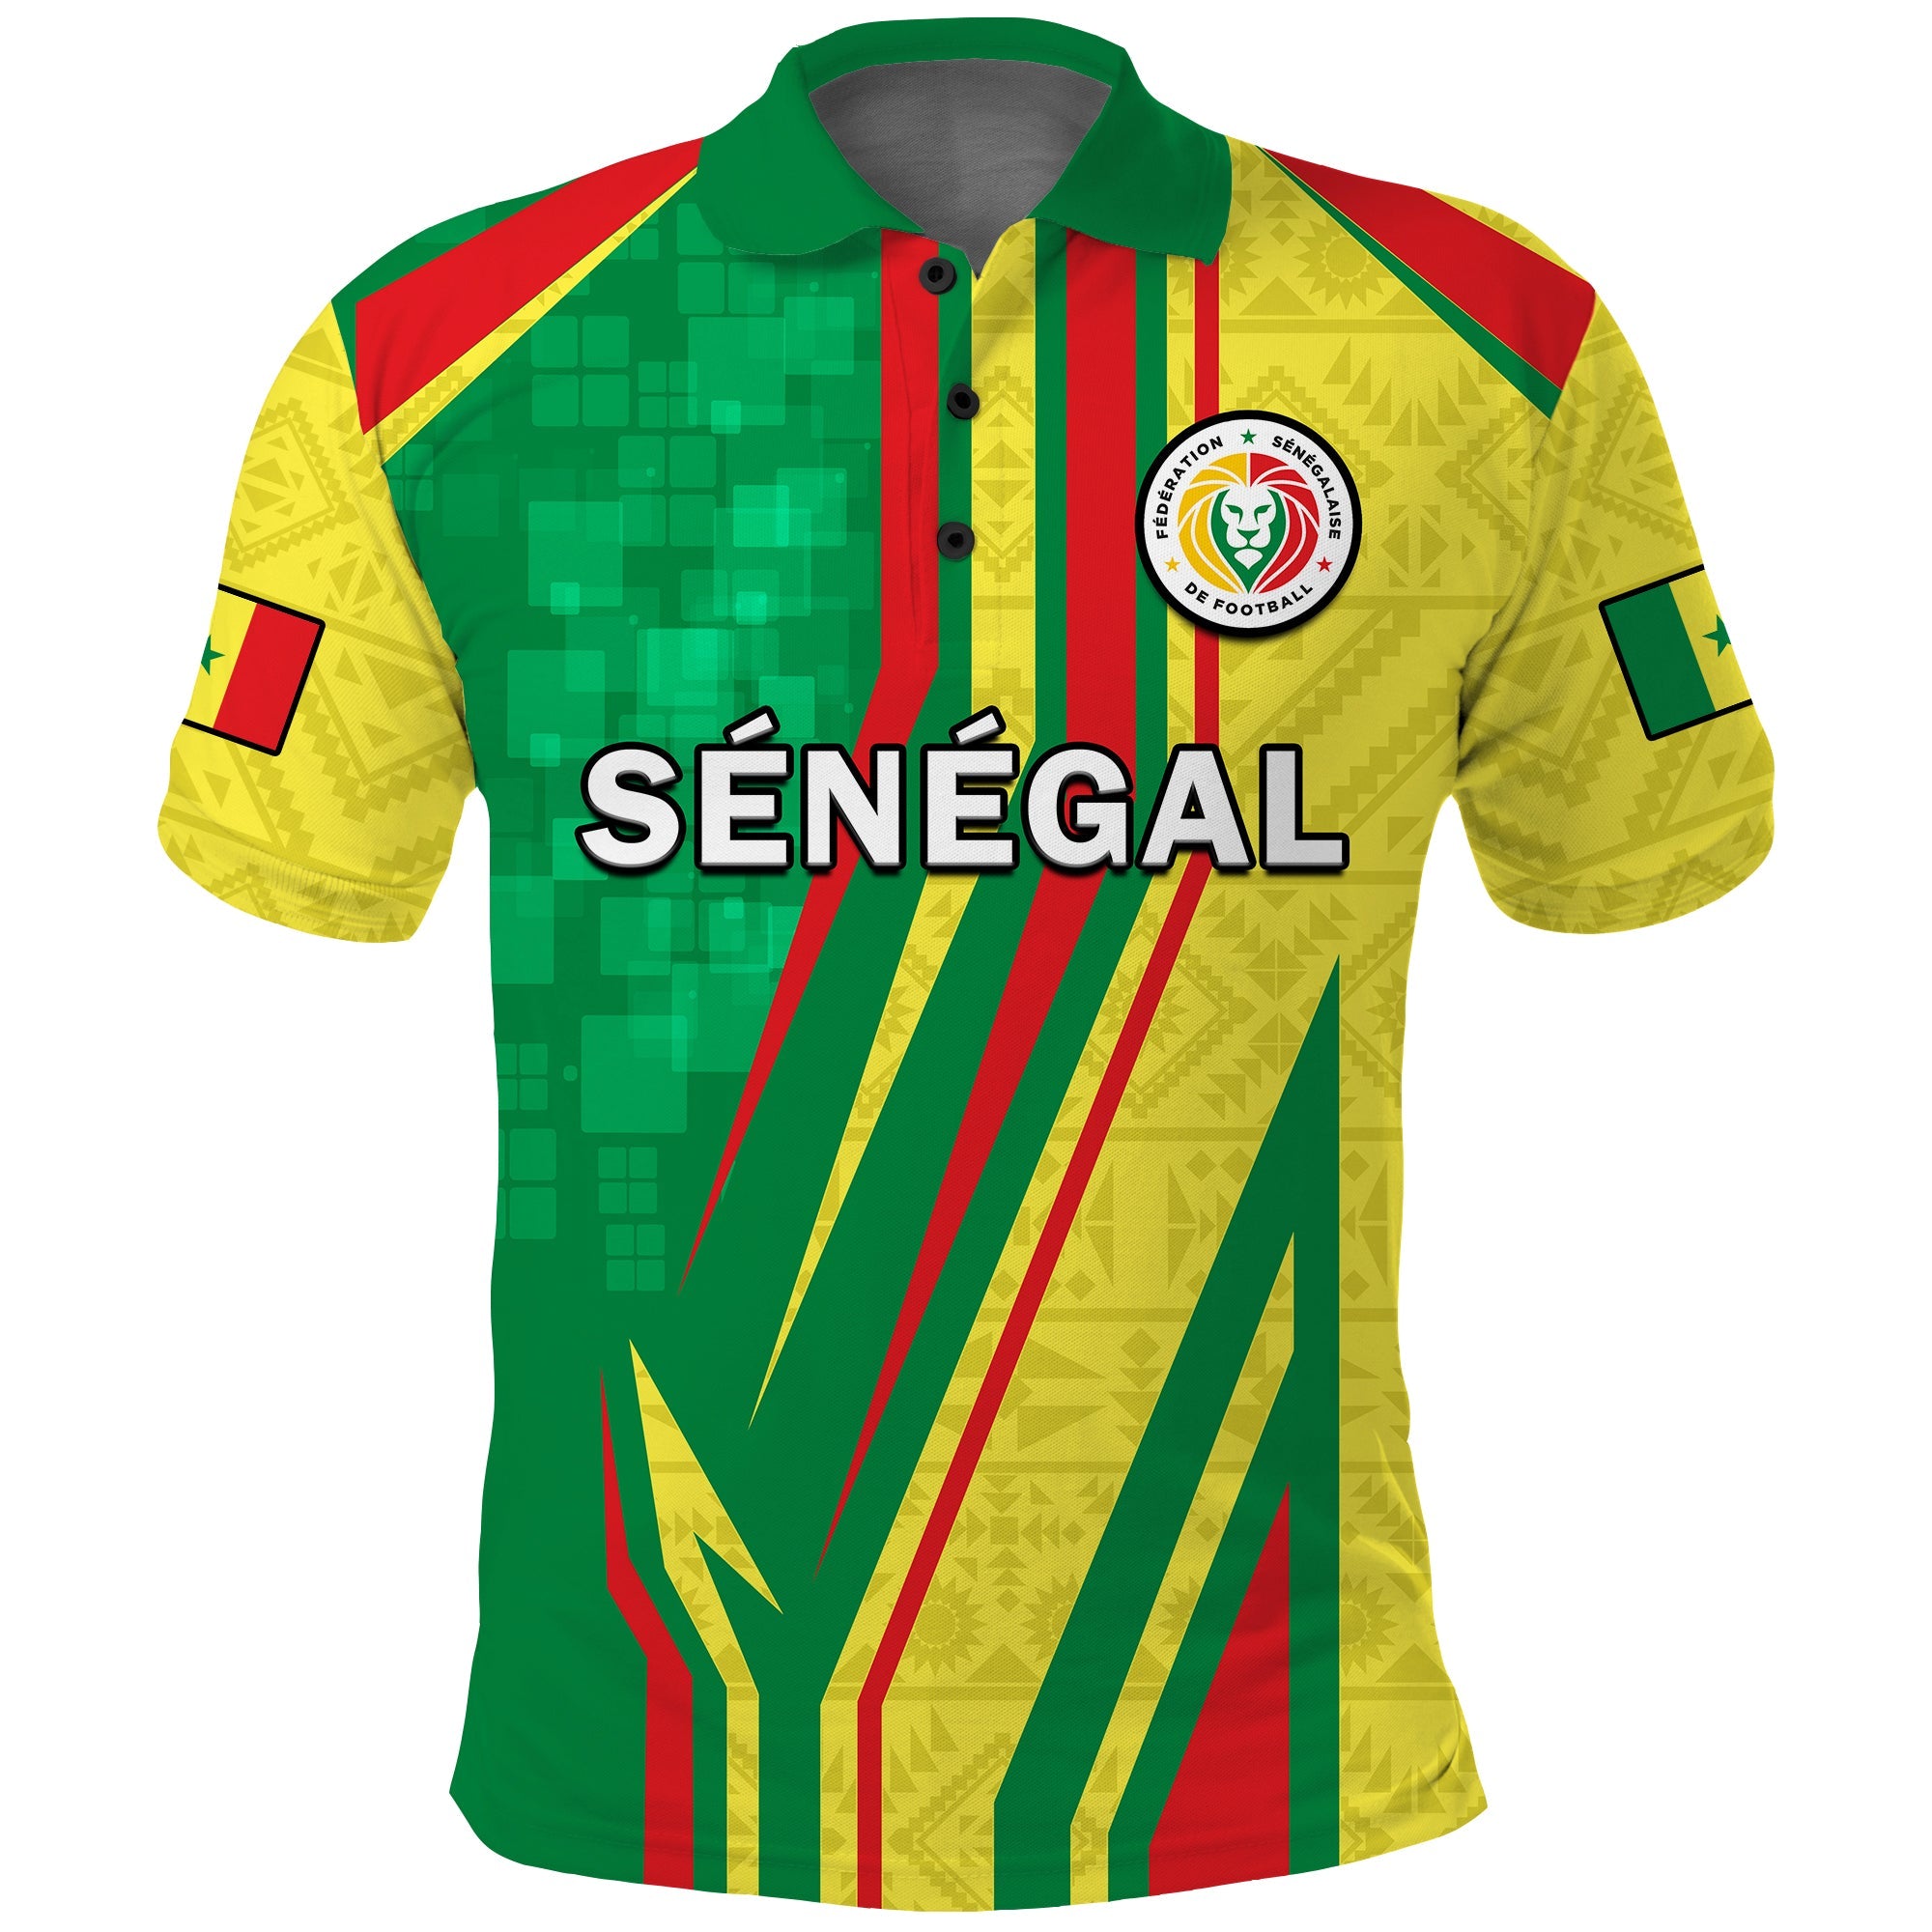 senegal-football-polo-shirt-allez-les-lions-sporty-style